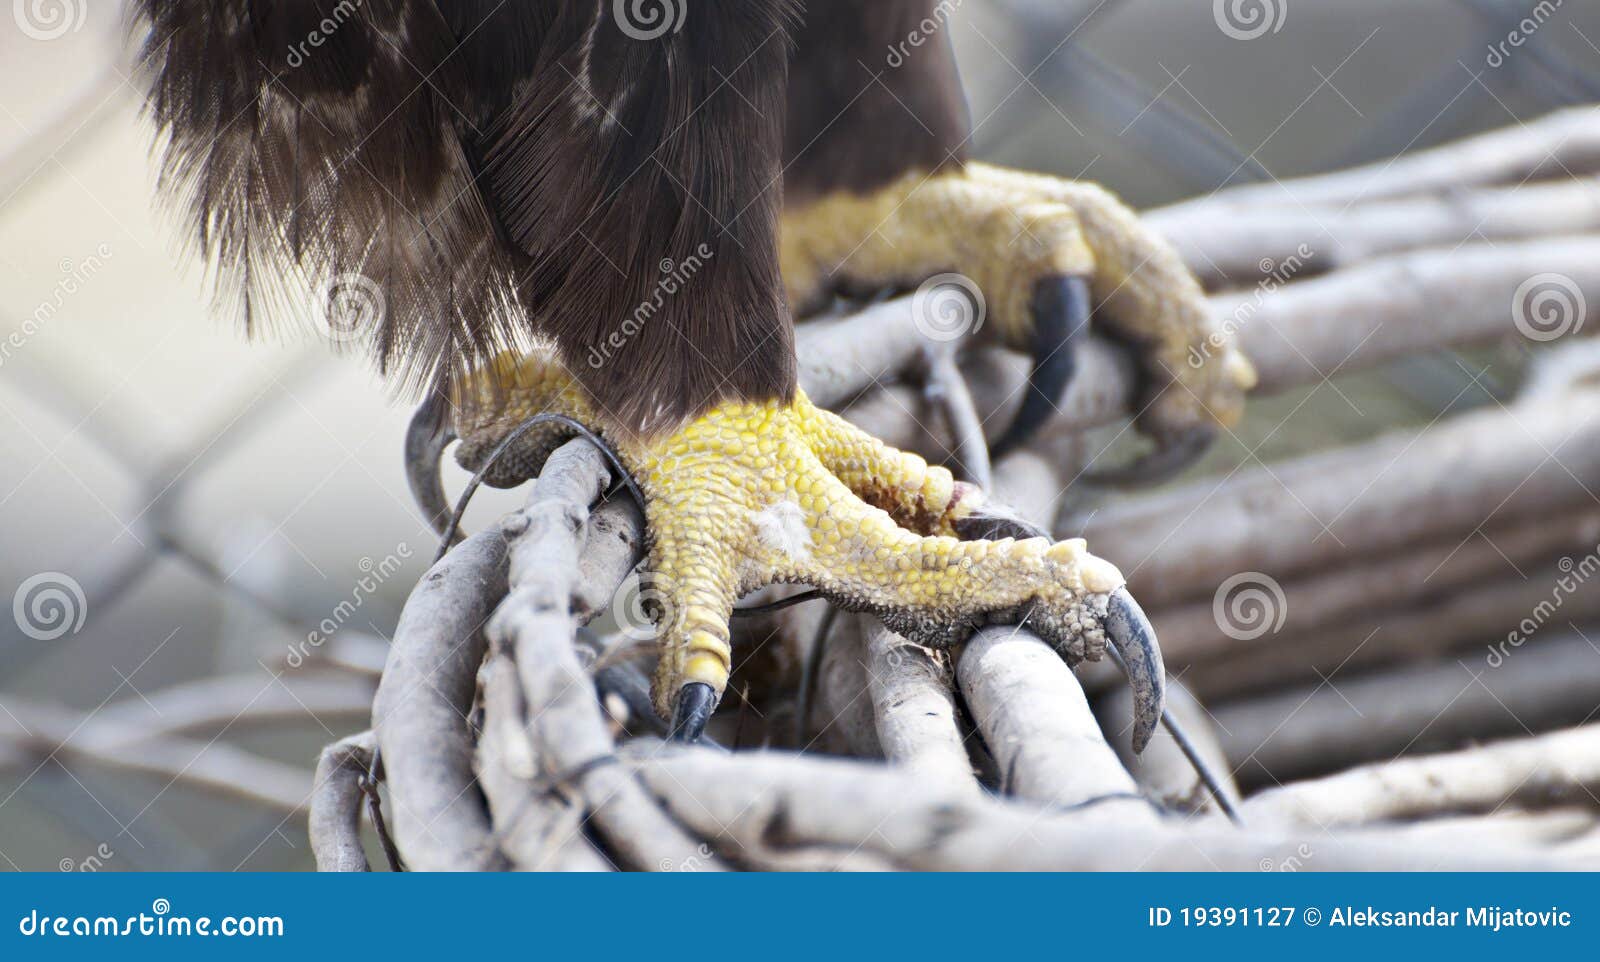 eagle claw close-up